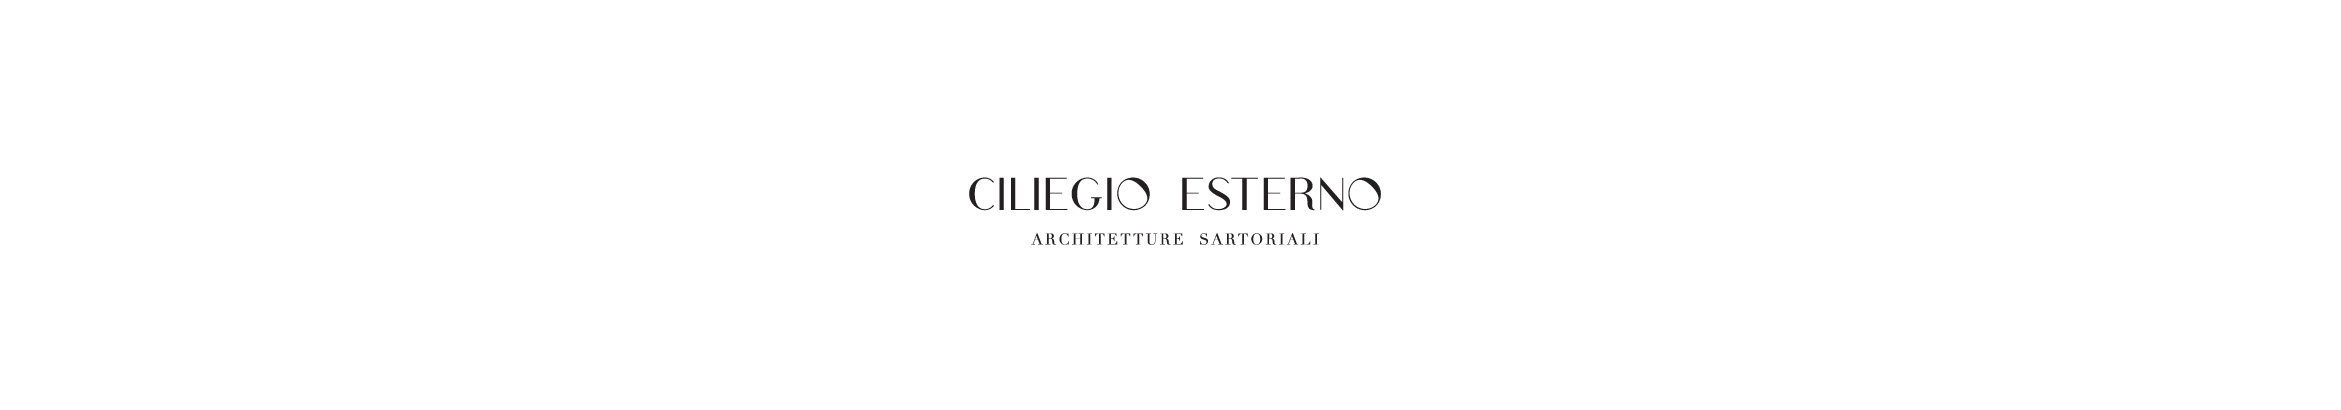 CiliegioEsterno Studio profil başlığı